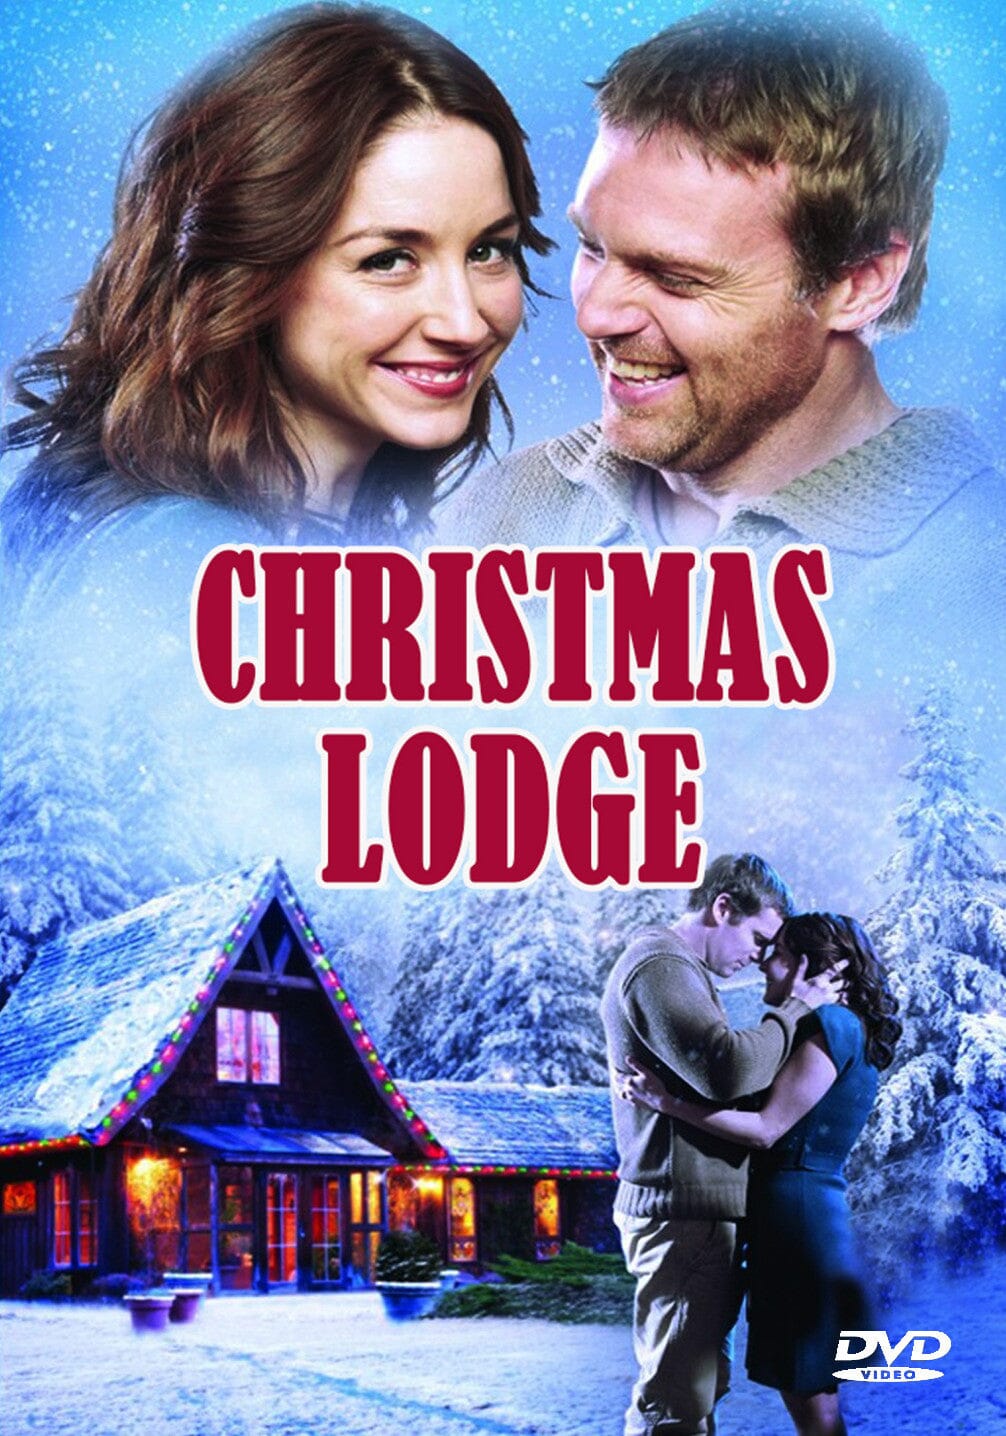 The Lodge [DVD]